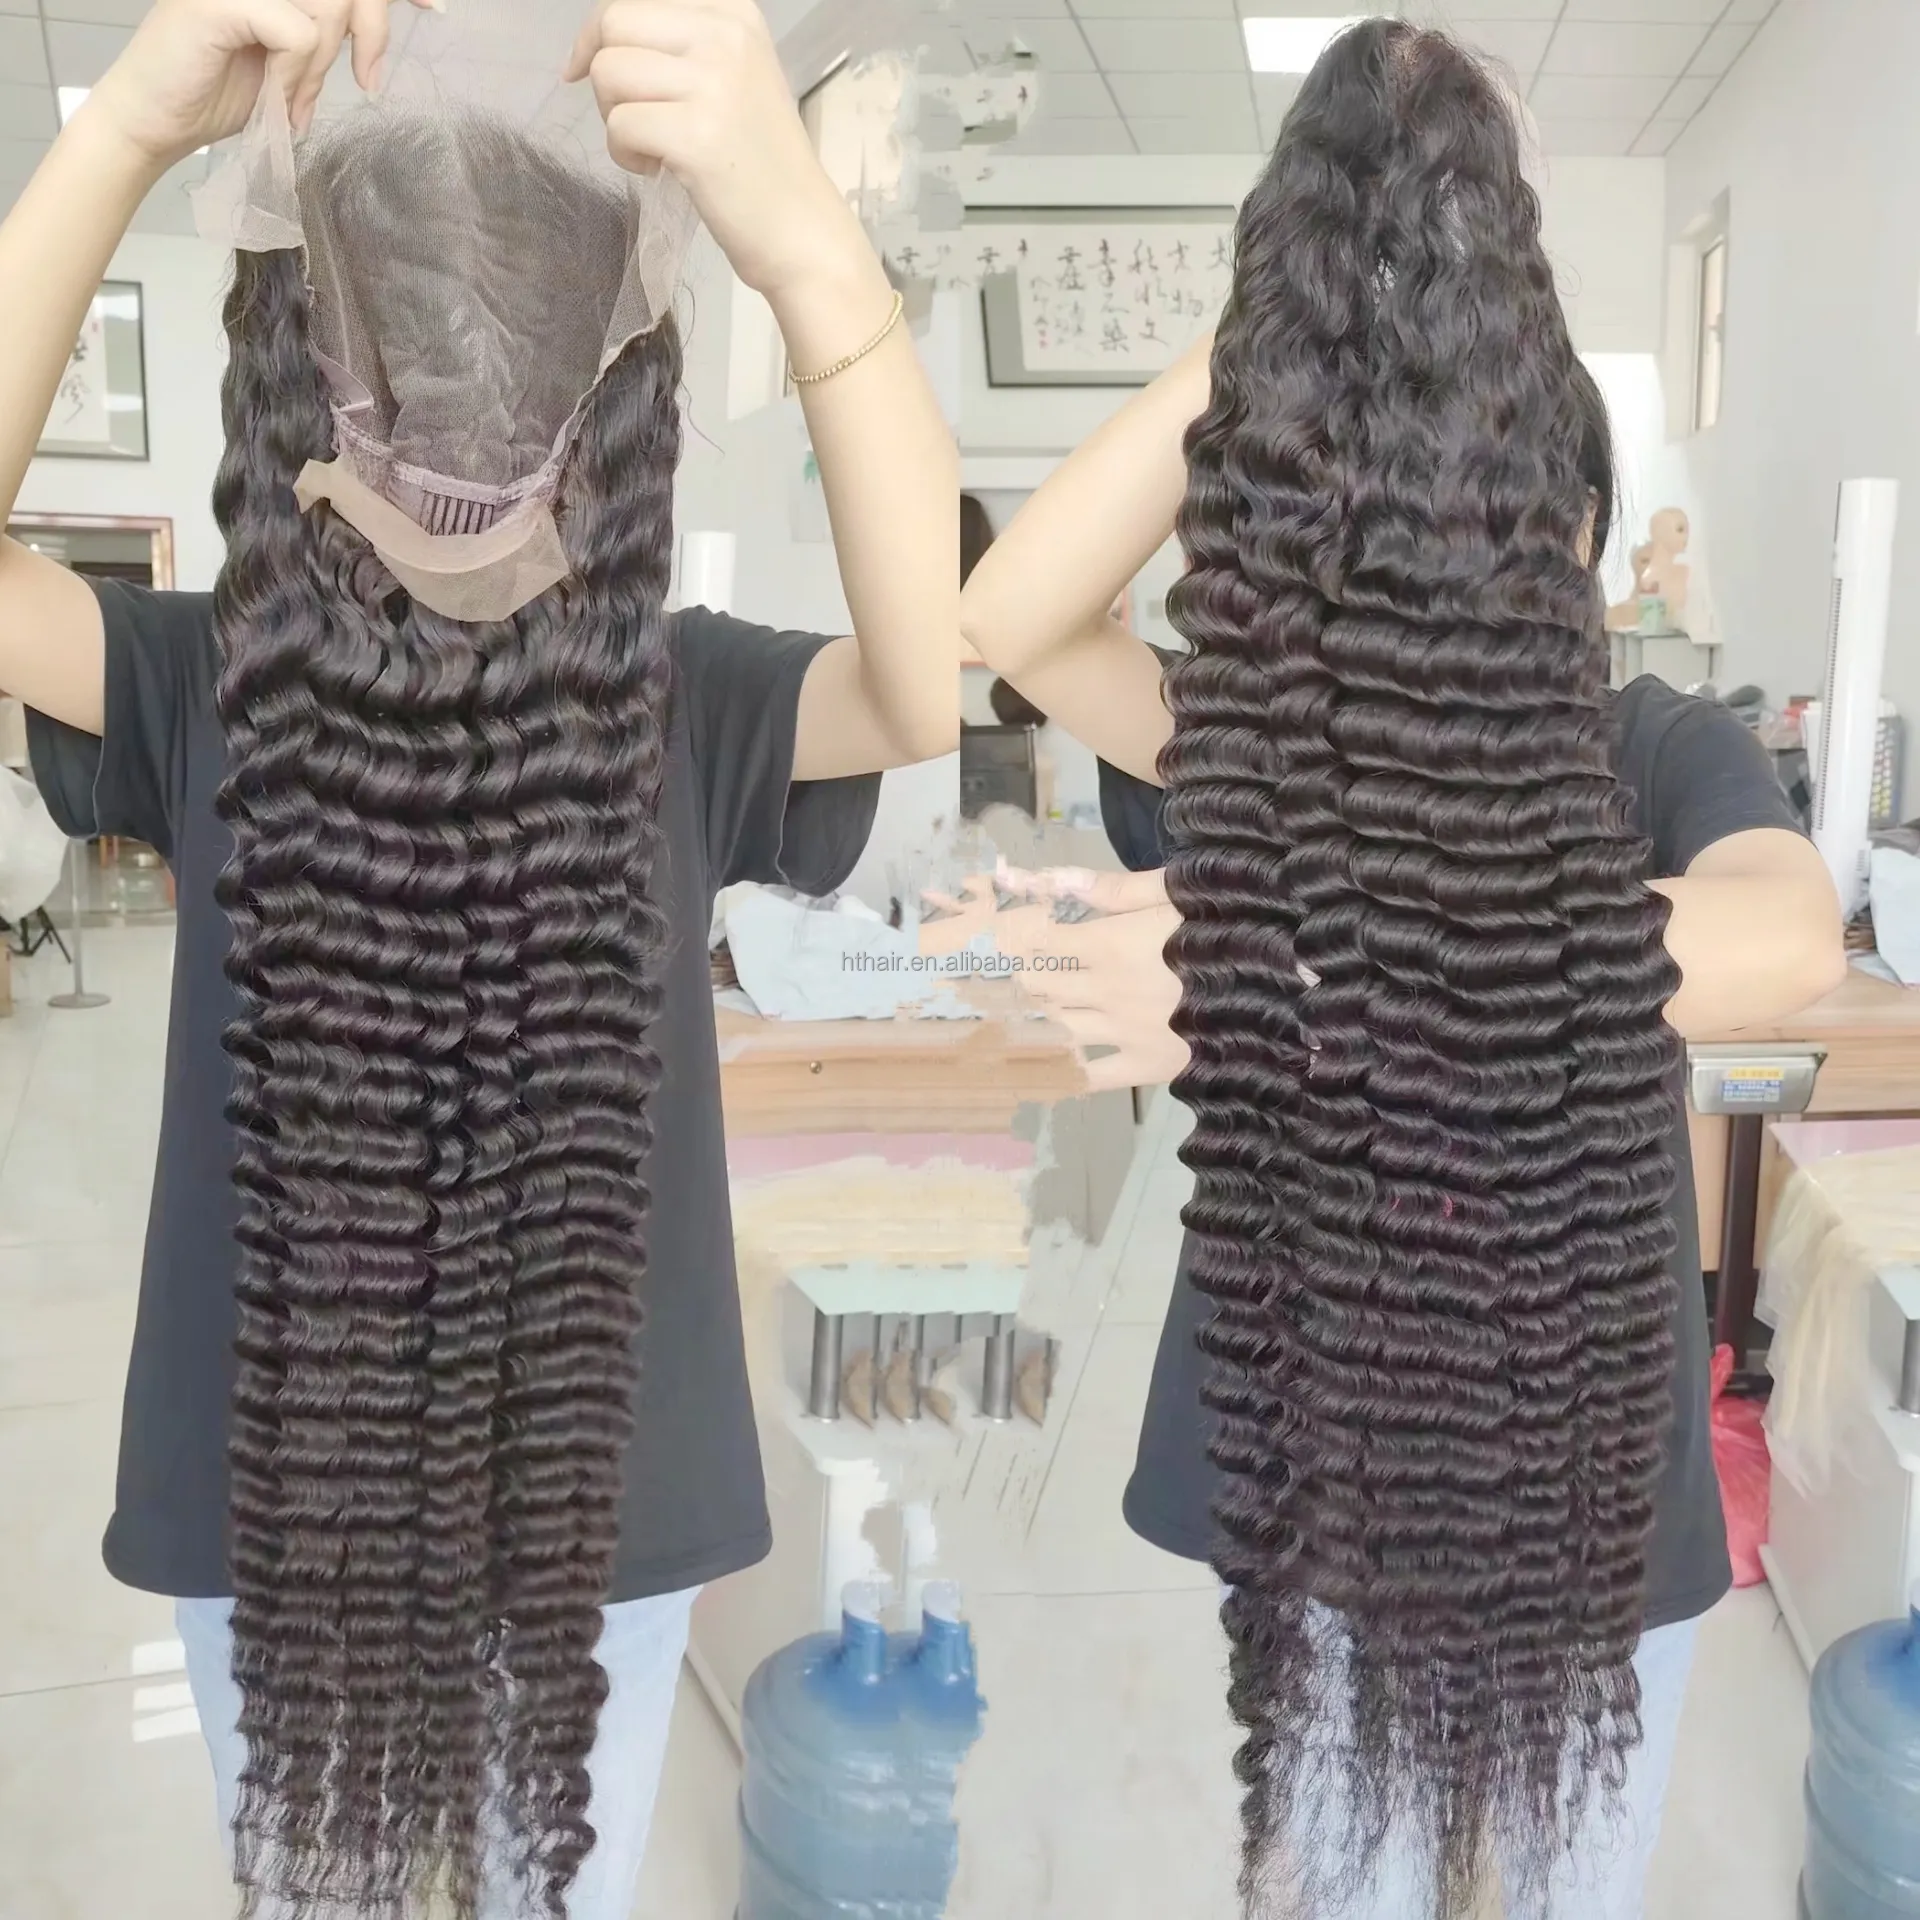 Lace Front Wigs,human Hair Wigs HD Lace Frontal Wig Vendors 40 Inch Pre Pluck 13x4 13x6 Brazilian Hair for Black Women,brazilian